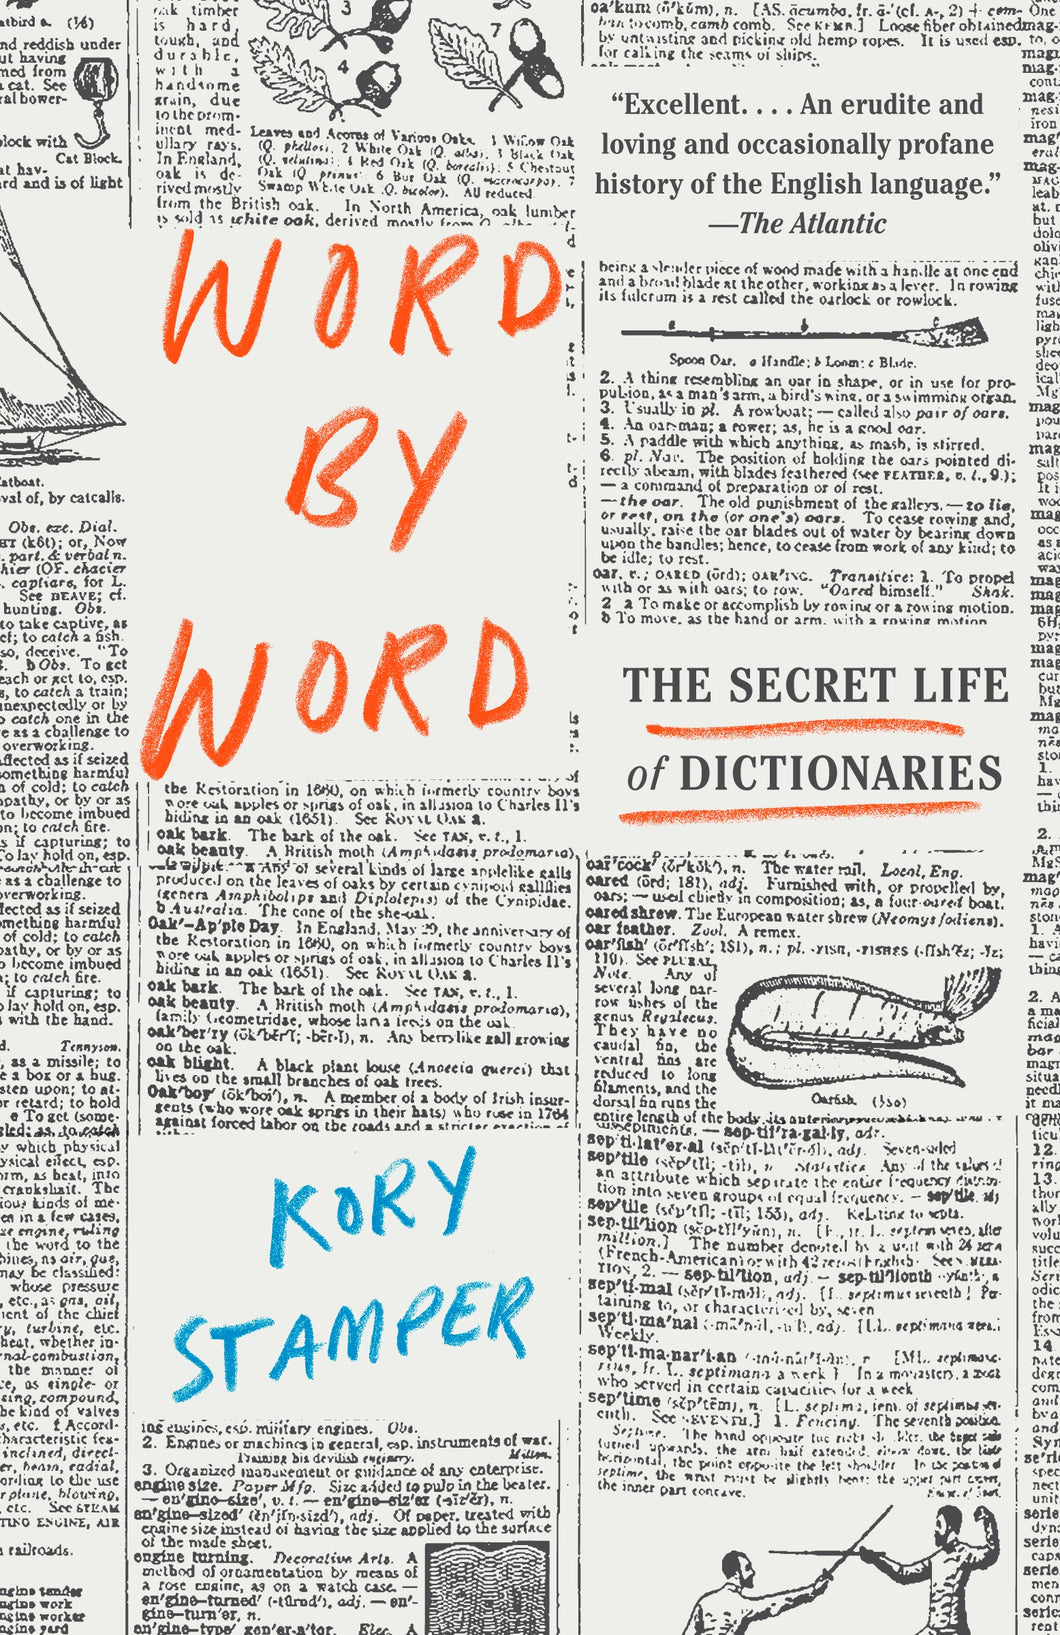 Word by Word : The Secret Life of Dictionaries ร้านหนังสือและสิ่งของ เป็นร้านหนังสือภาษาอังกฤษหายาก และร้านกาแฟ หรือ บุ๊คคาเฟ่ ตั้งอยู่สุขุมวิท กรุงเทพ